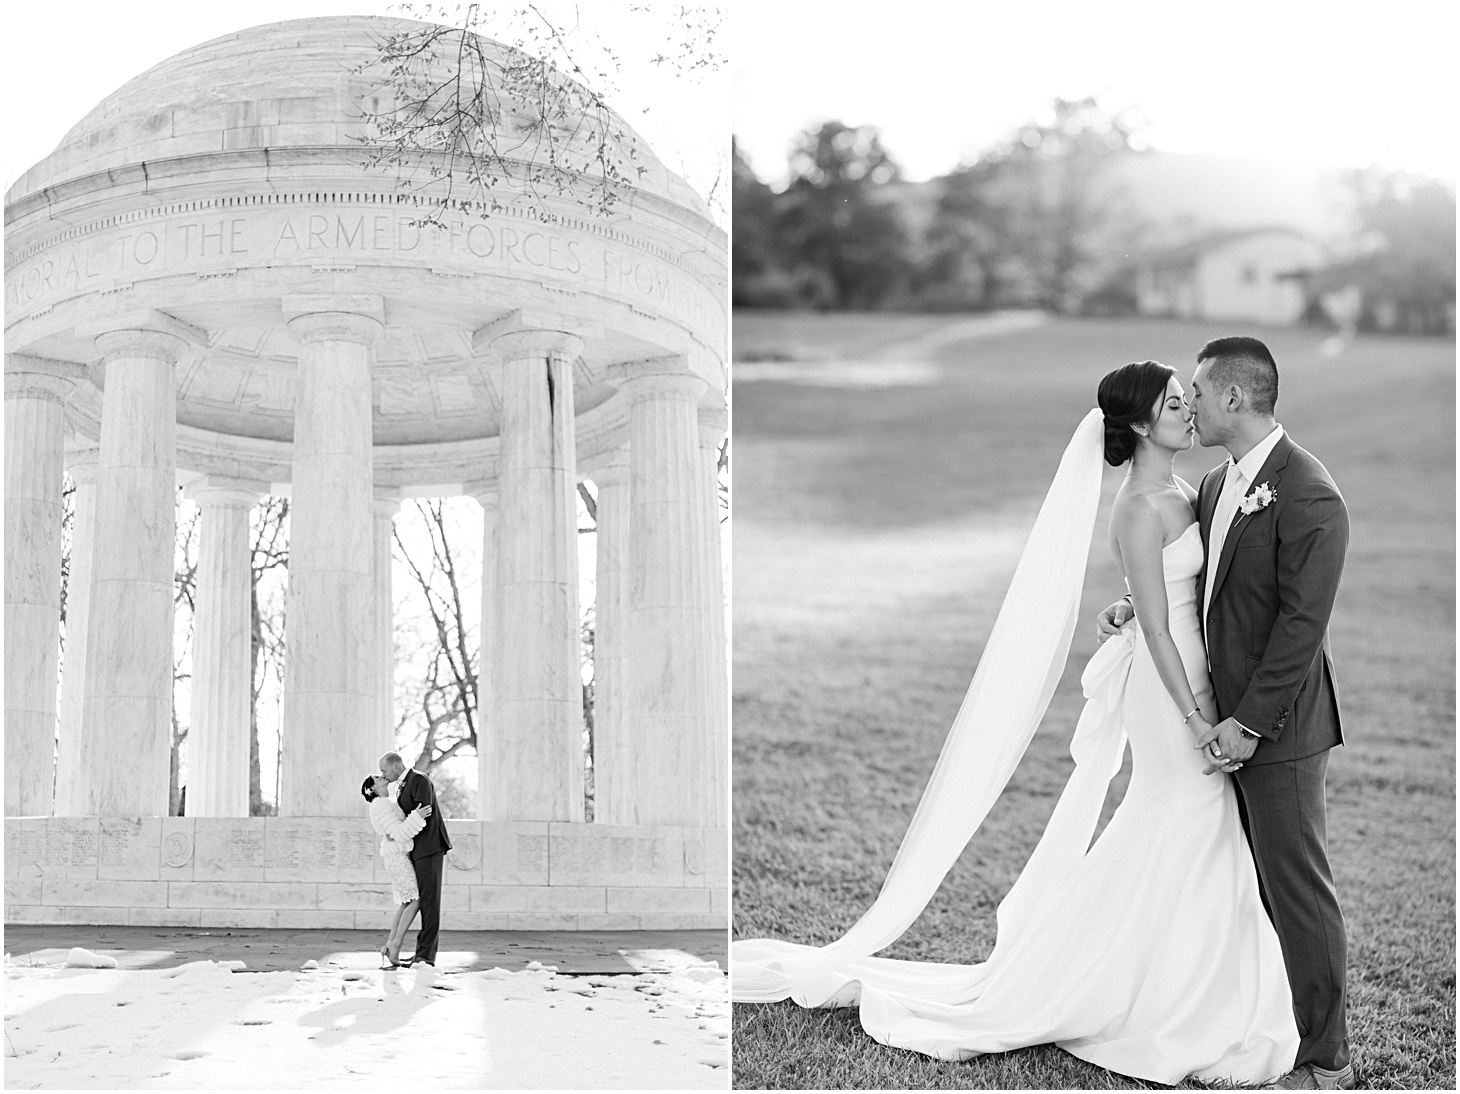 black & white wedding portrait | Top Washington DC wedding photographer Sarah Bradshaw